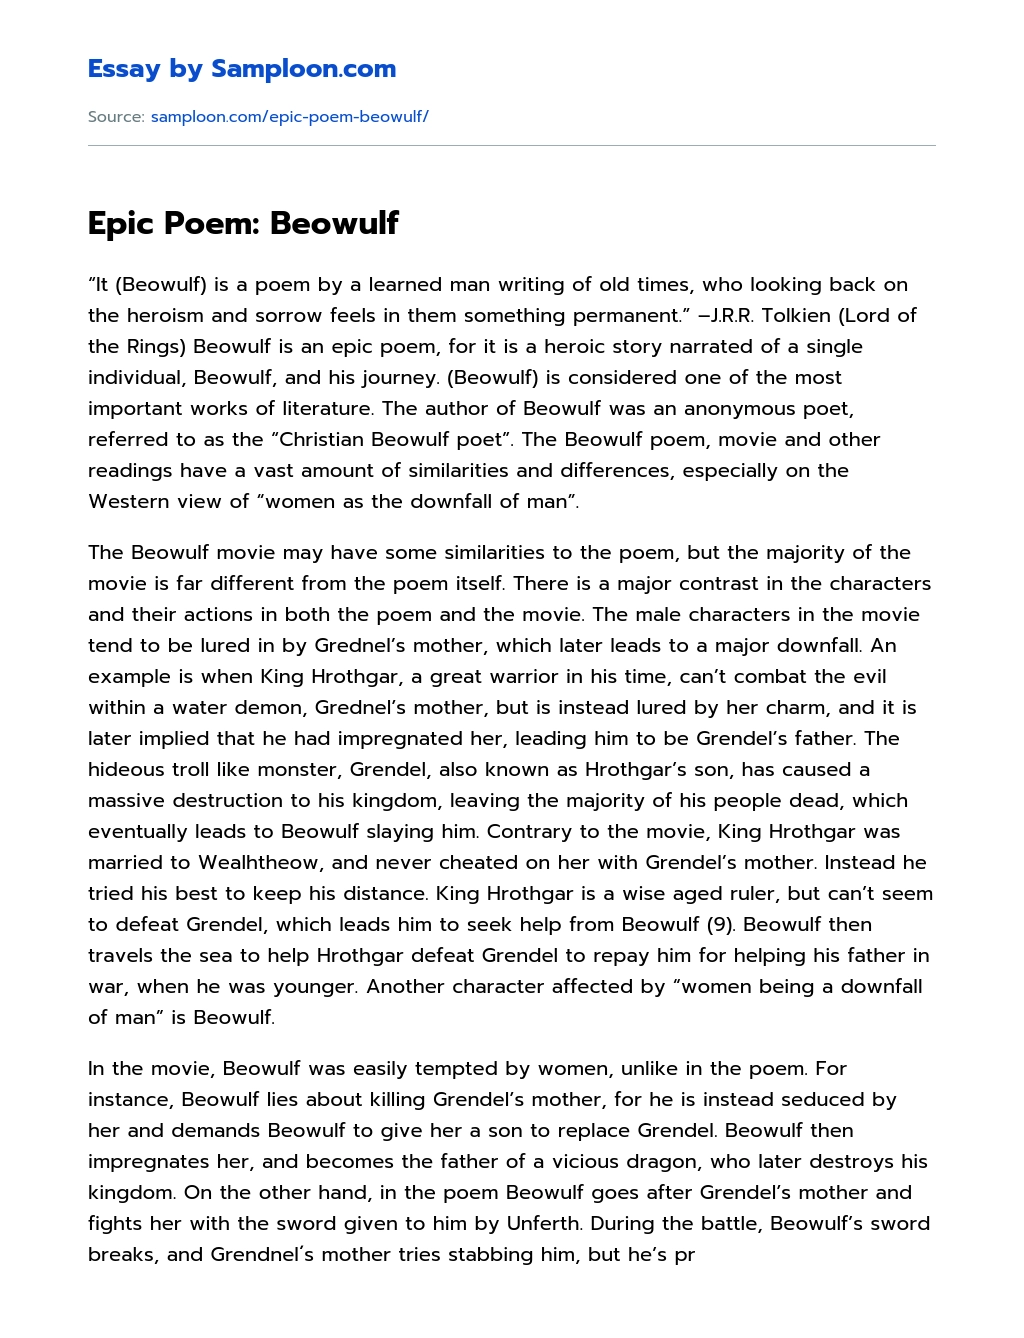 Epic Poem: Beowulf Movie Analysis essay